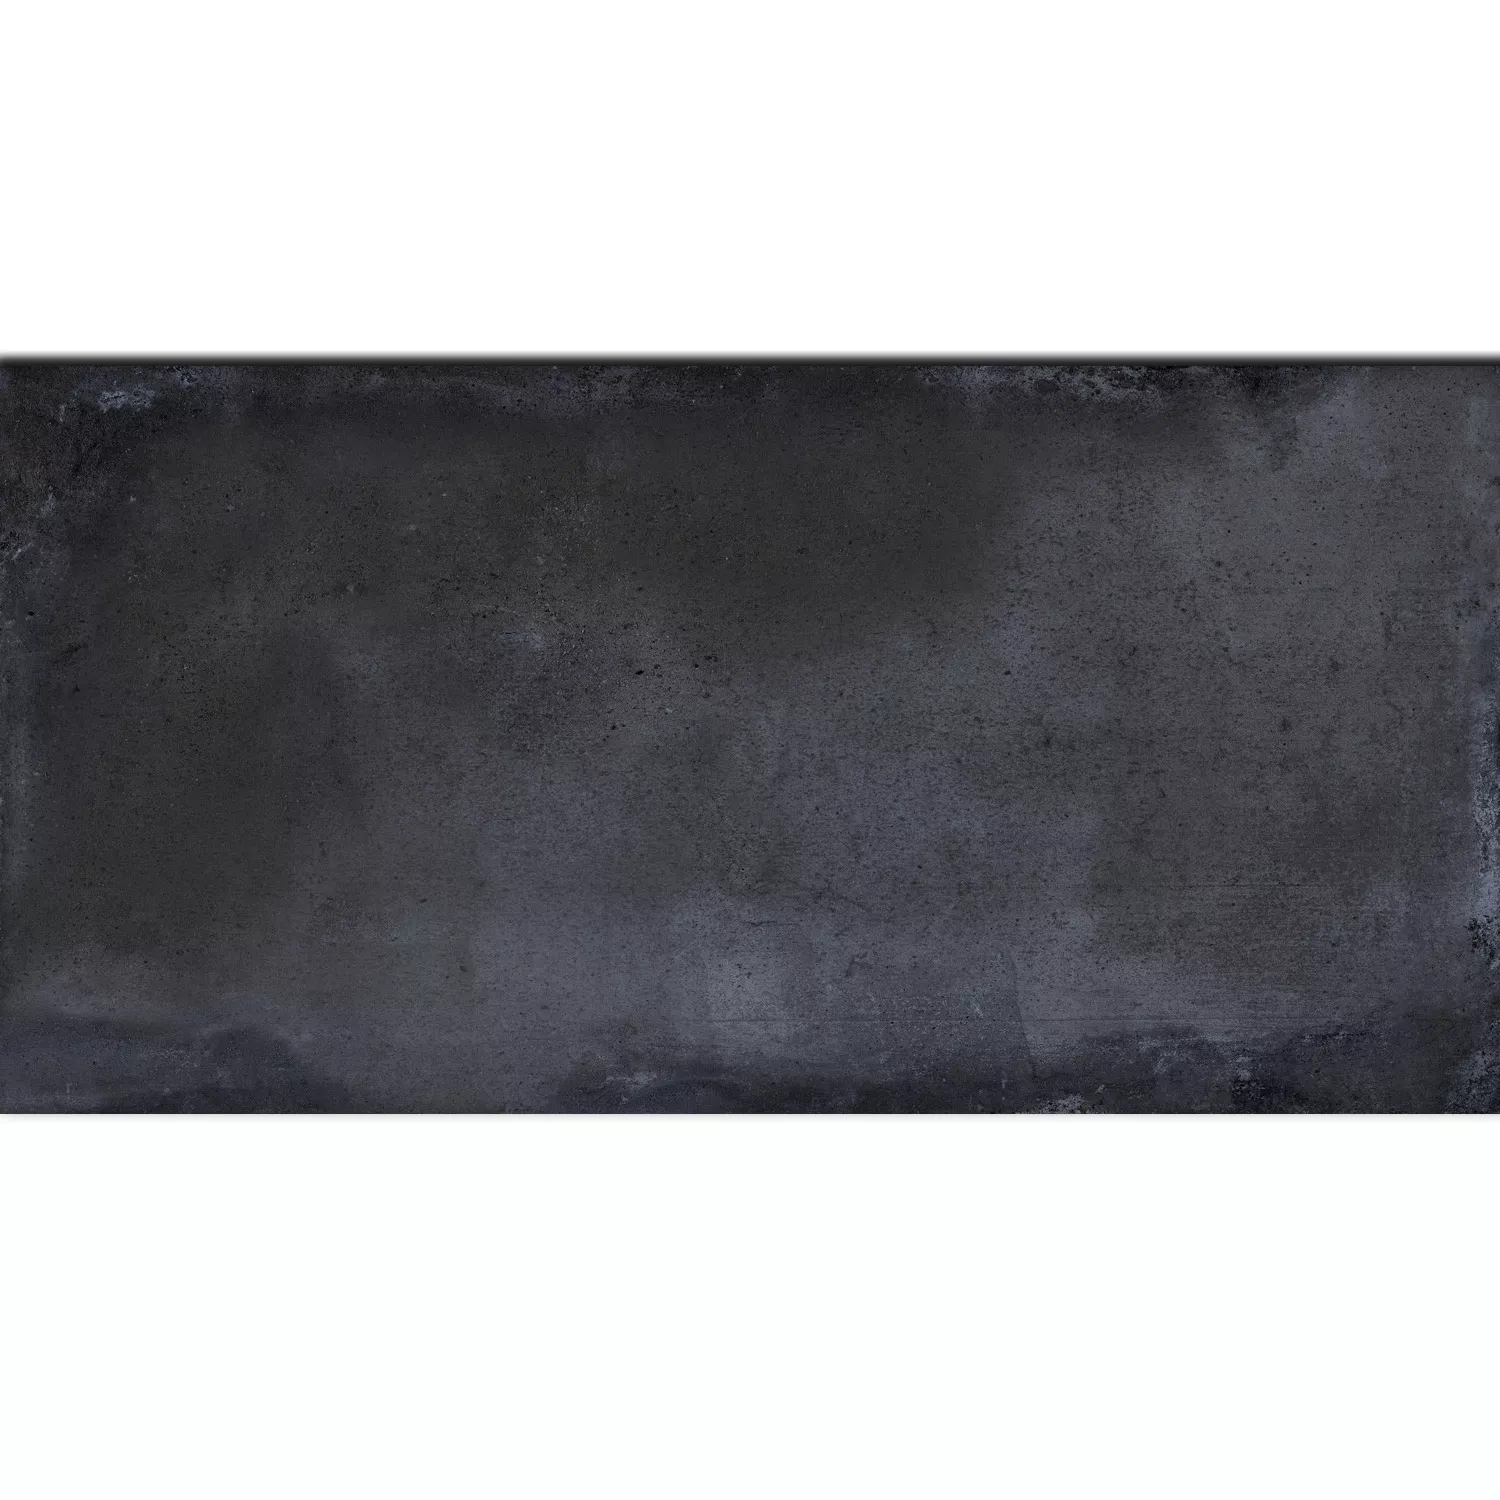 Sample Vloertegels Cement Optic Maryland Antraciet 30x60cm